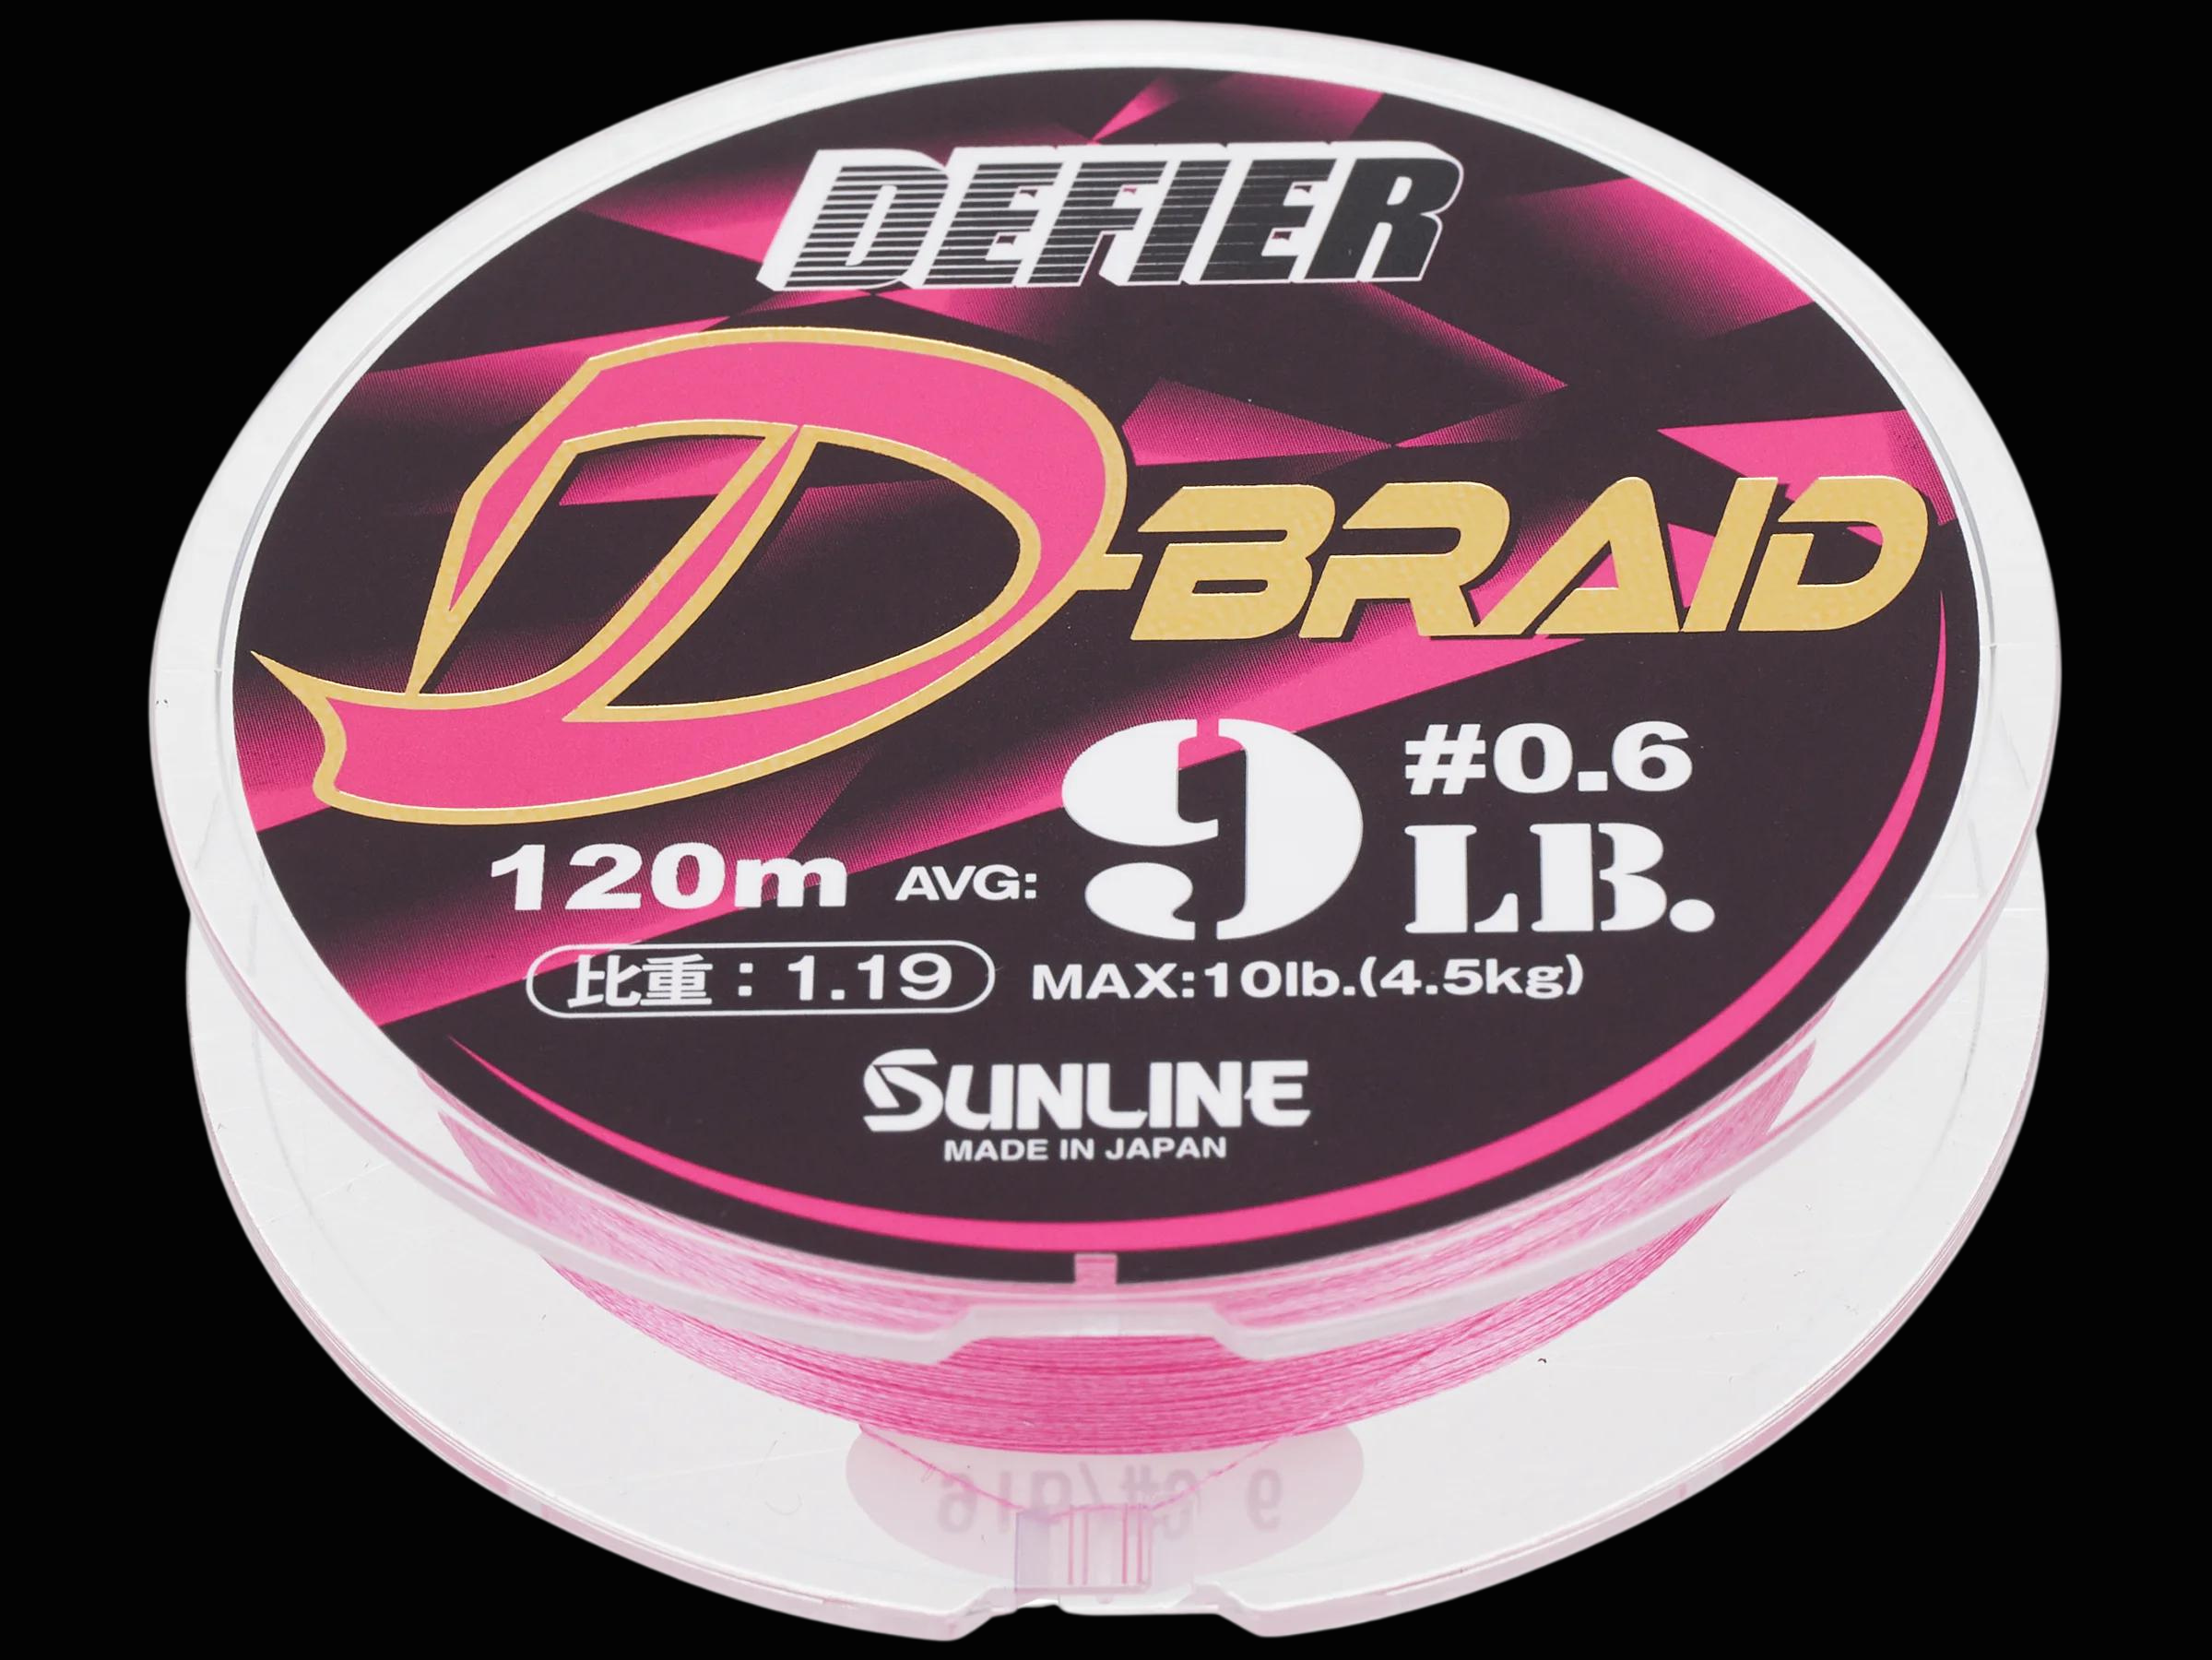 Sunline Defier D-Braid Braided Line Pink 131yd 11lb.